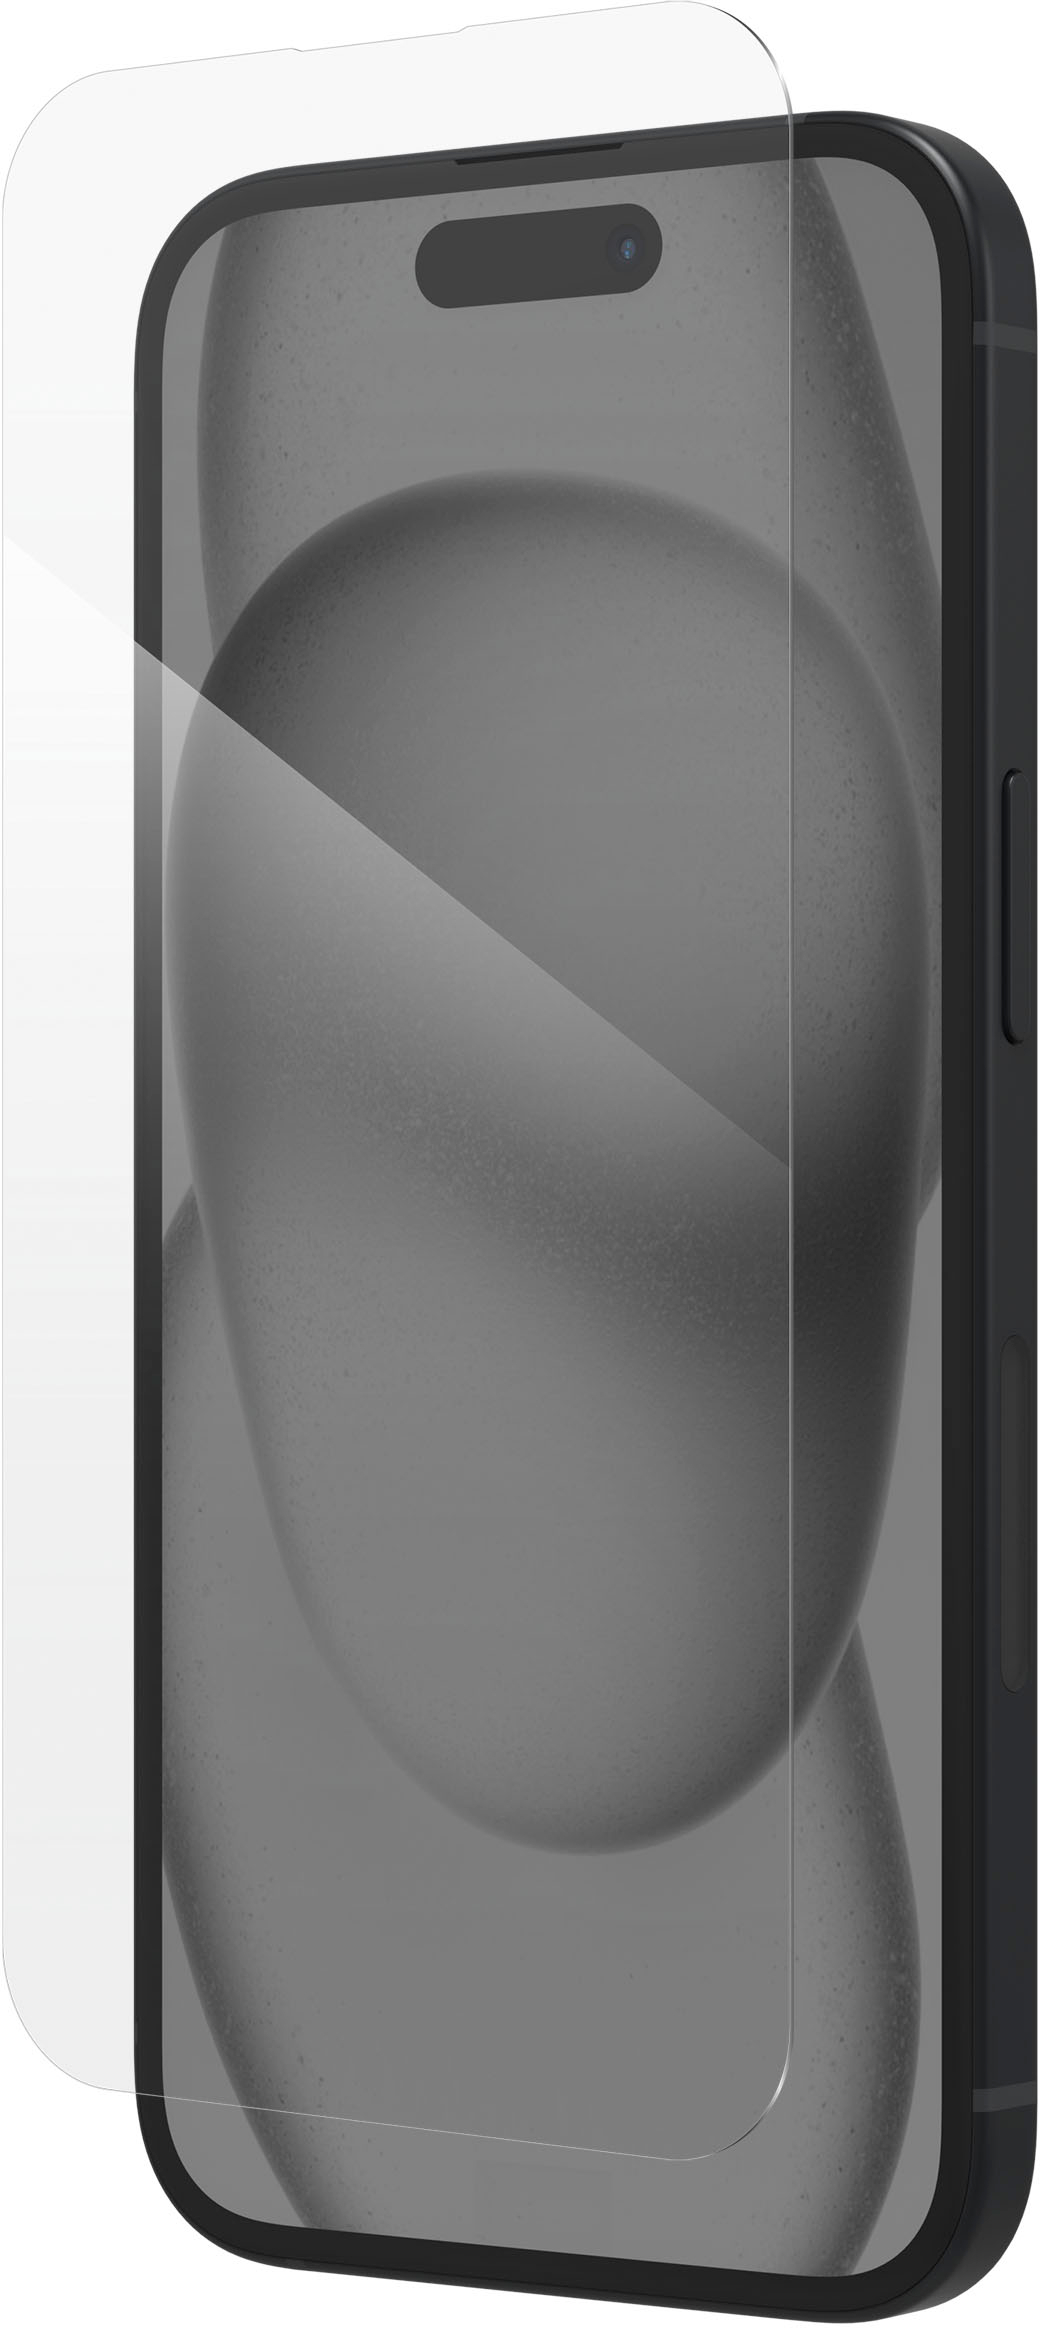 ZAGG InvisibleShield Glass+ Defense Screen Protector for Apple